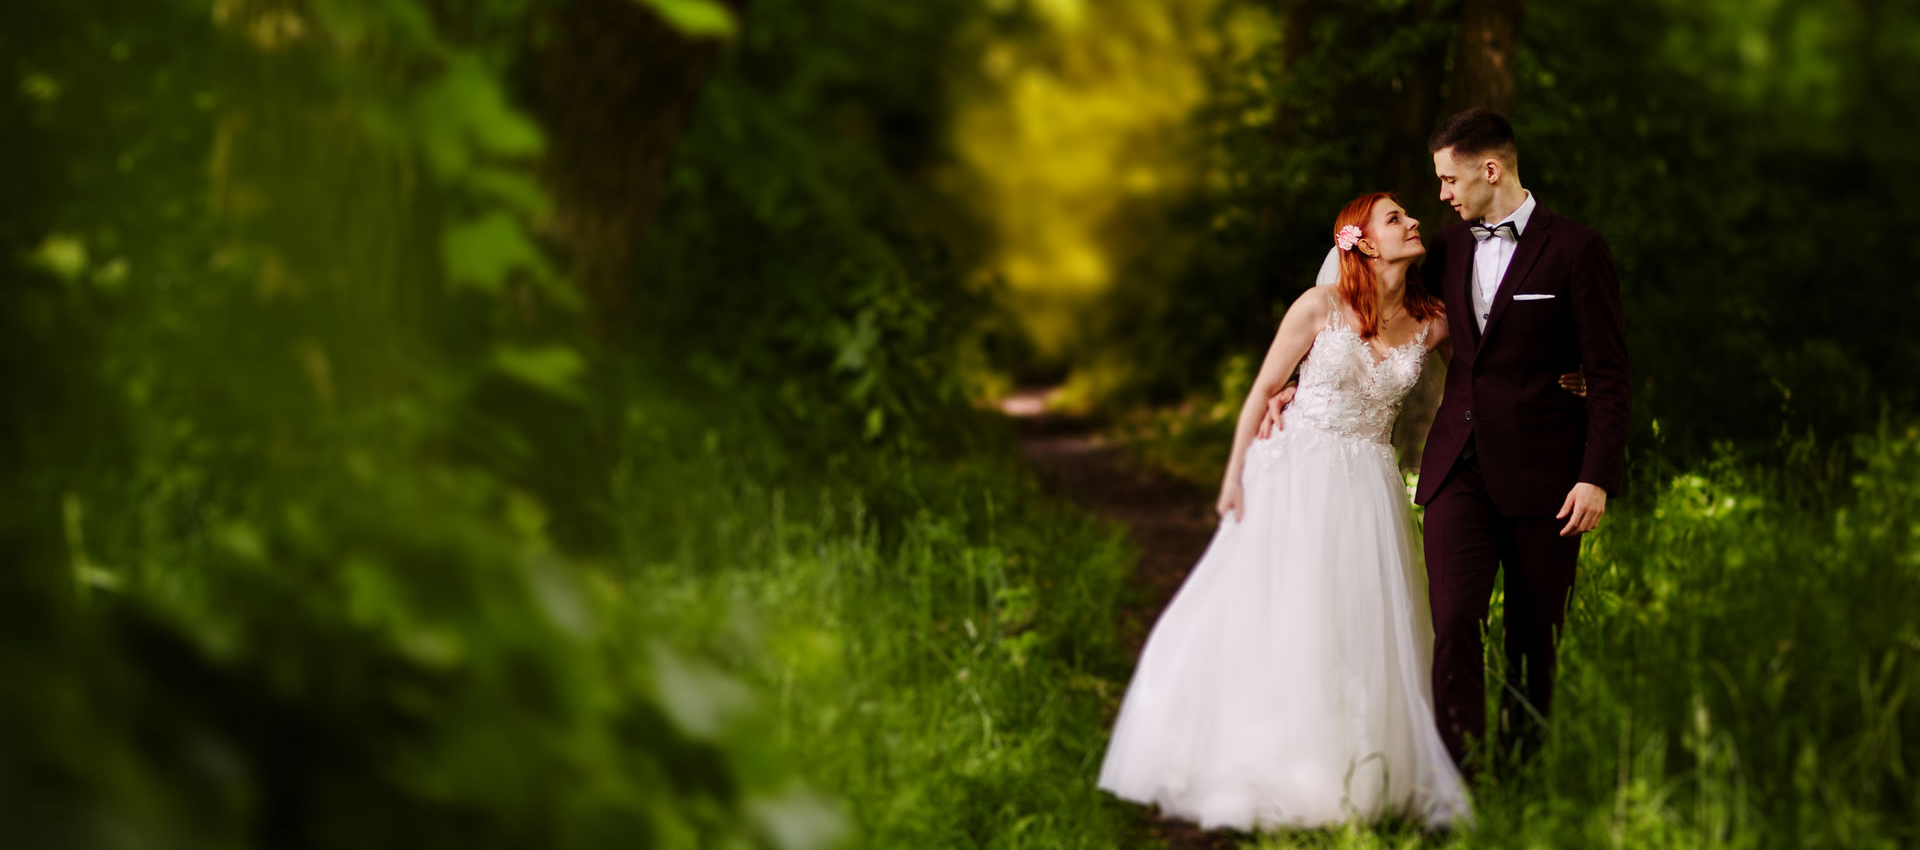 Fotografia ślubna pary młodej w lesie